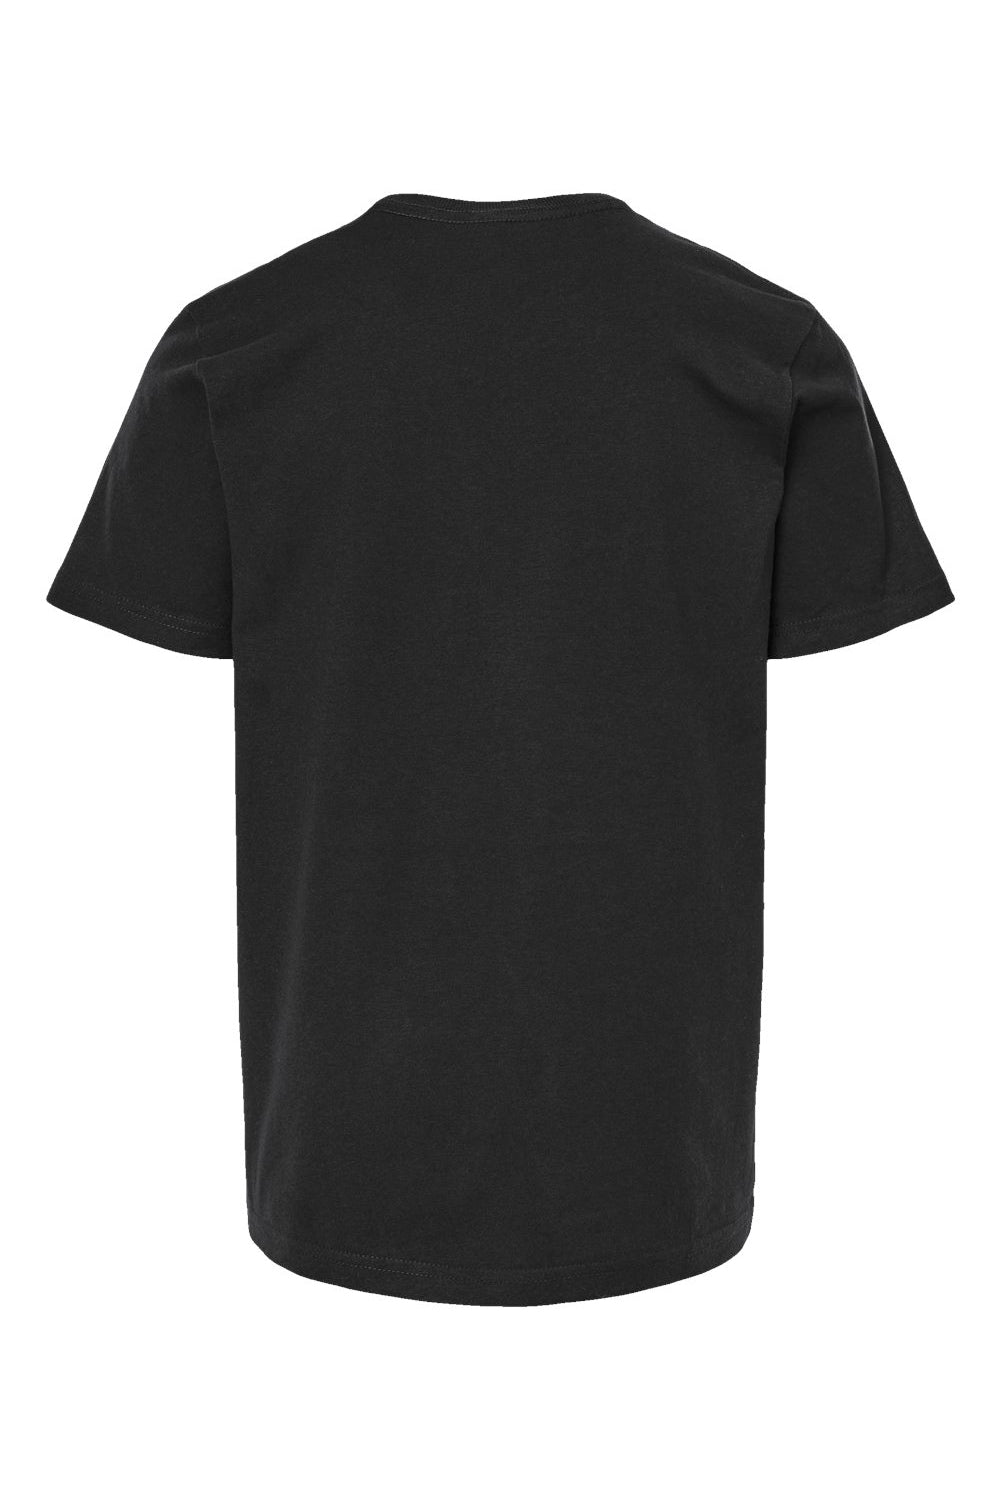 Tultex 295 Youth Jersey Short Sleeve Crewneck T-Shirt Black Flat Back